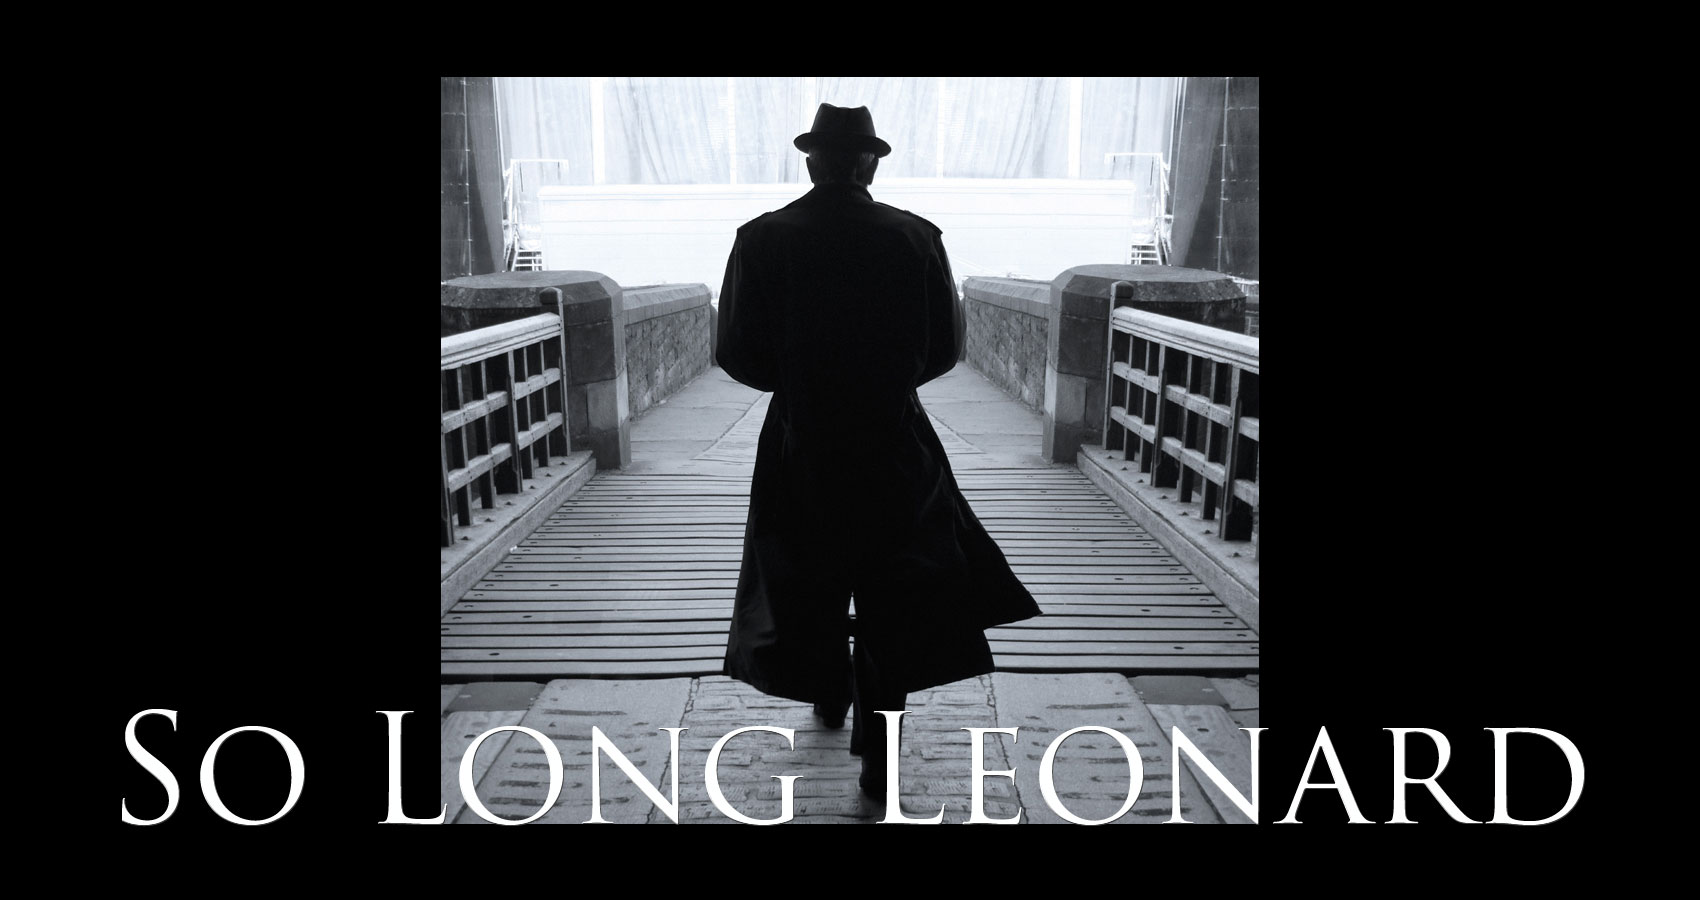 So Long Leonard written by Martin Brown at Spillwords.com